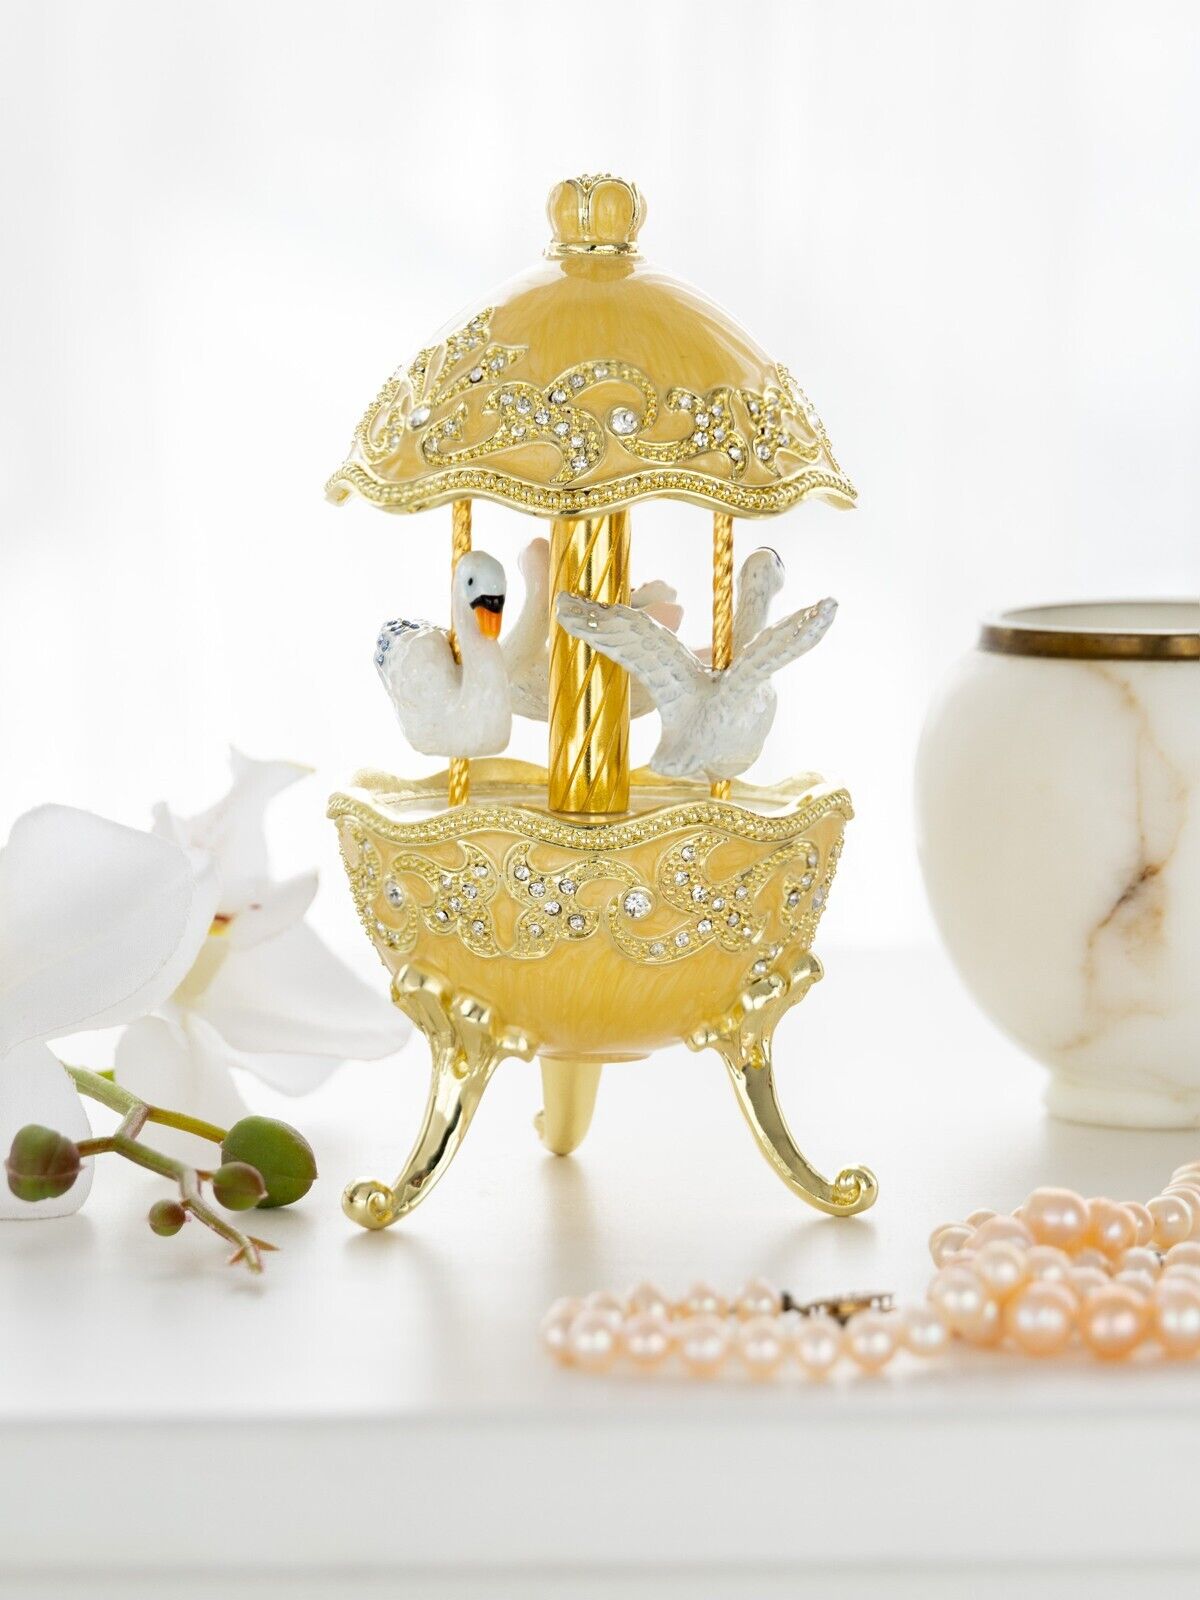 Keren Kopal Yellow Carousel Egg & Royal Swans Decorated with Austrian Crystals